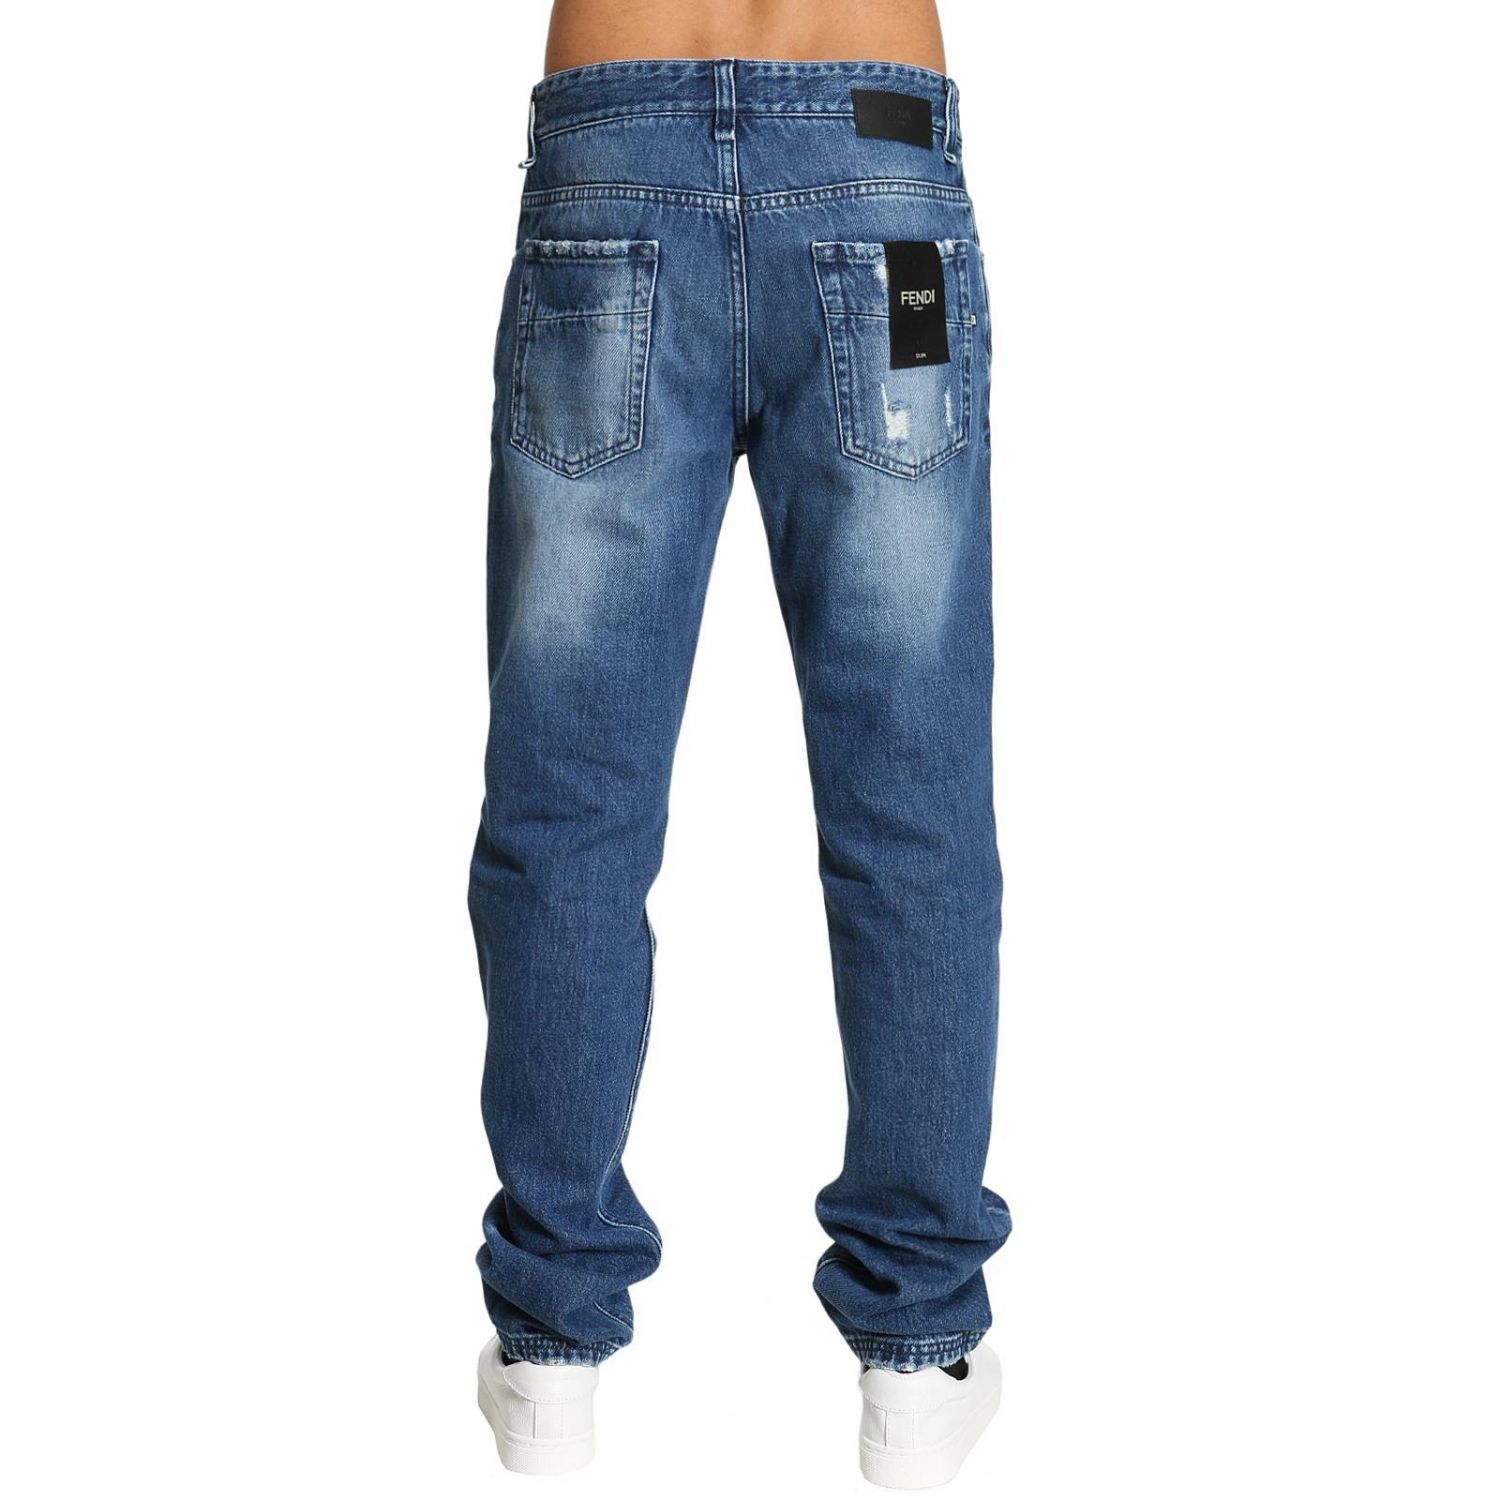 Jeans men Fendi | Jeans Fendi Men Stone Washed | Jeans Fendi FLP201 ...